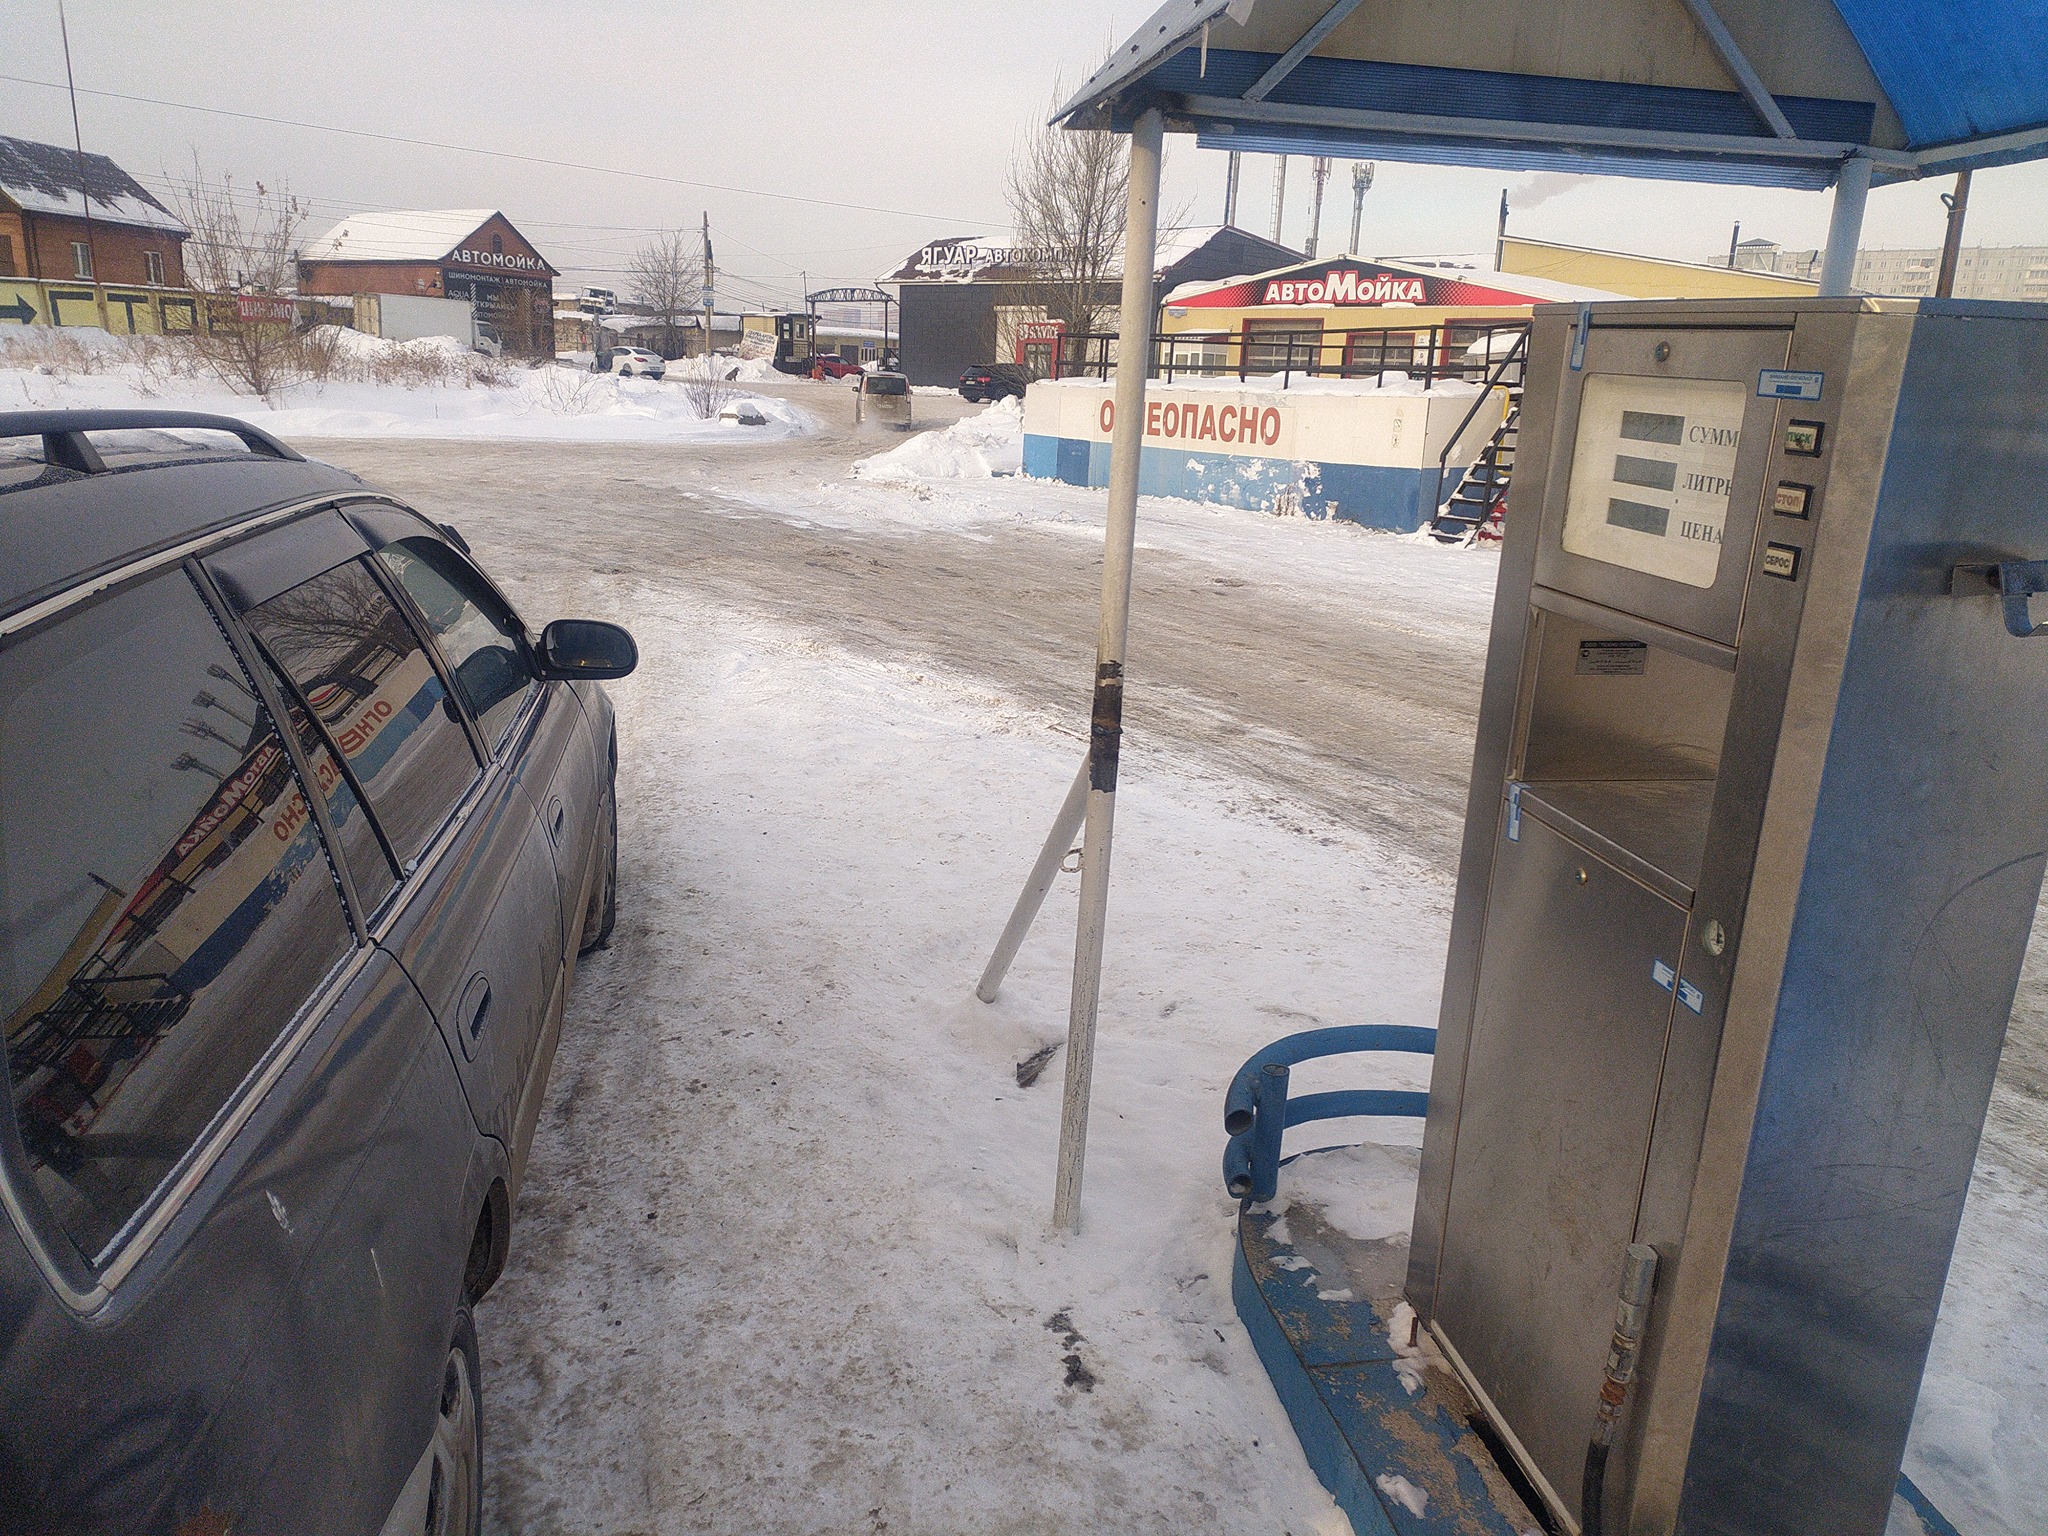 Плюс 2 рубля за февраль: красноярские автолюбители заметили рост цен на газ